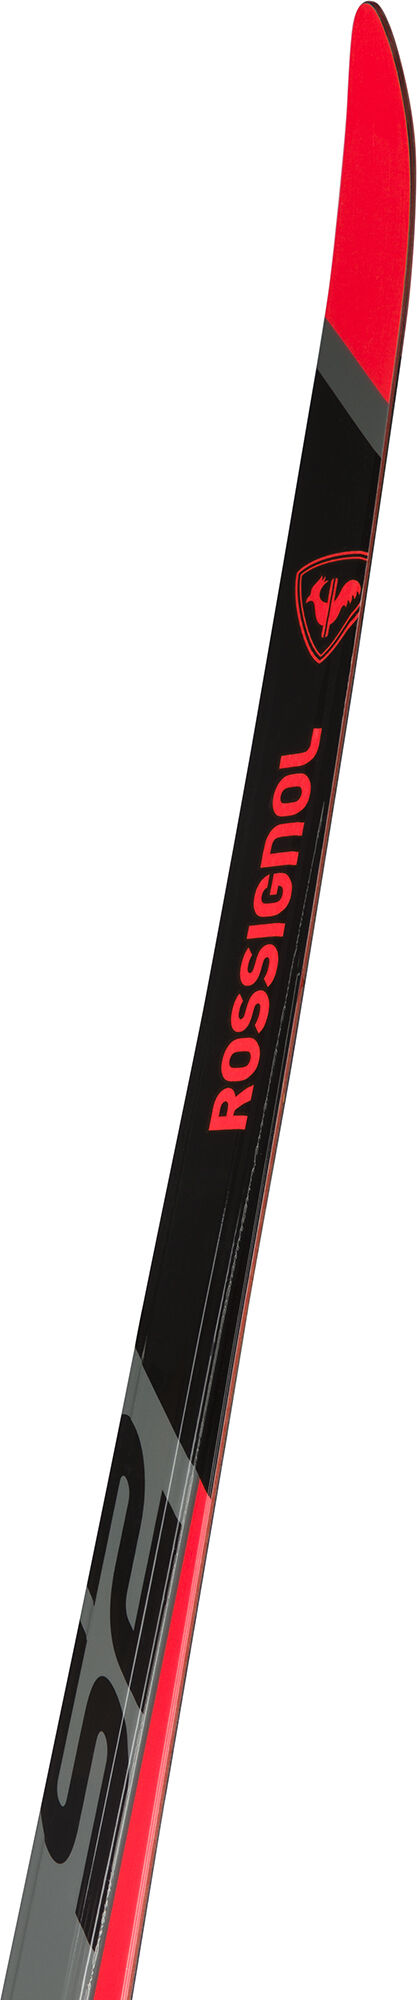 Rossignol Unisex Cross Country Racing Skis X-Ium Skating Wcs-S2 